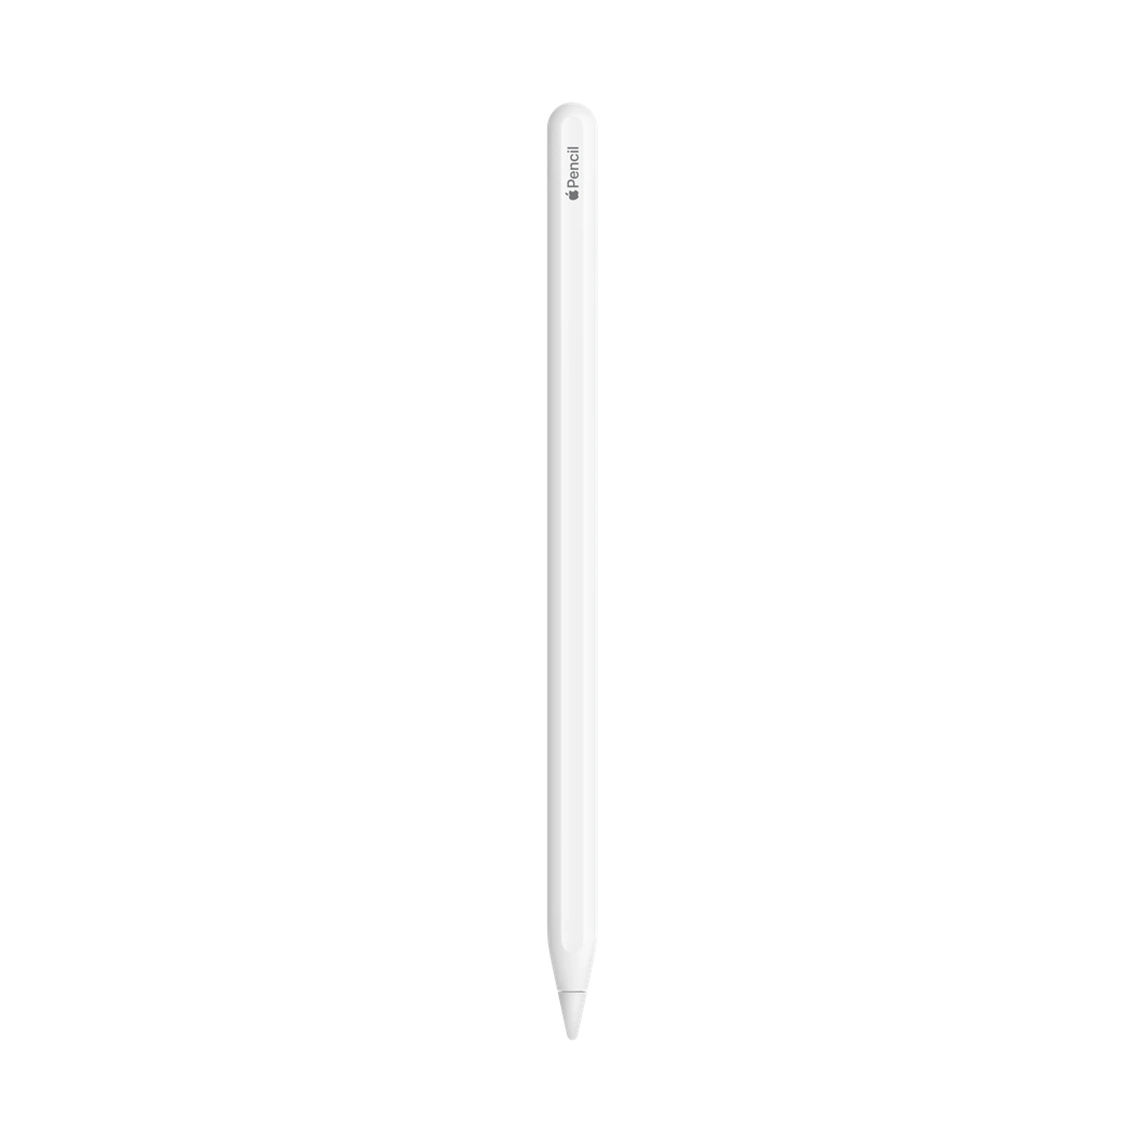 Apple iPad Pro M1 11-inch 128GB Wi-Fi